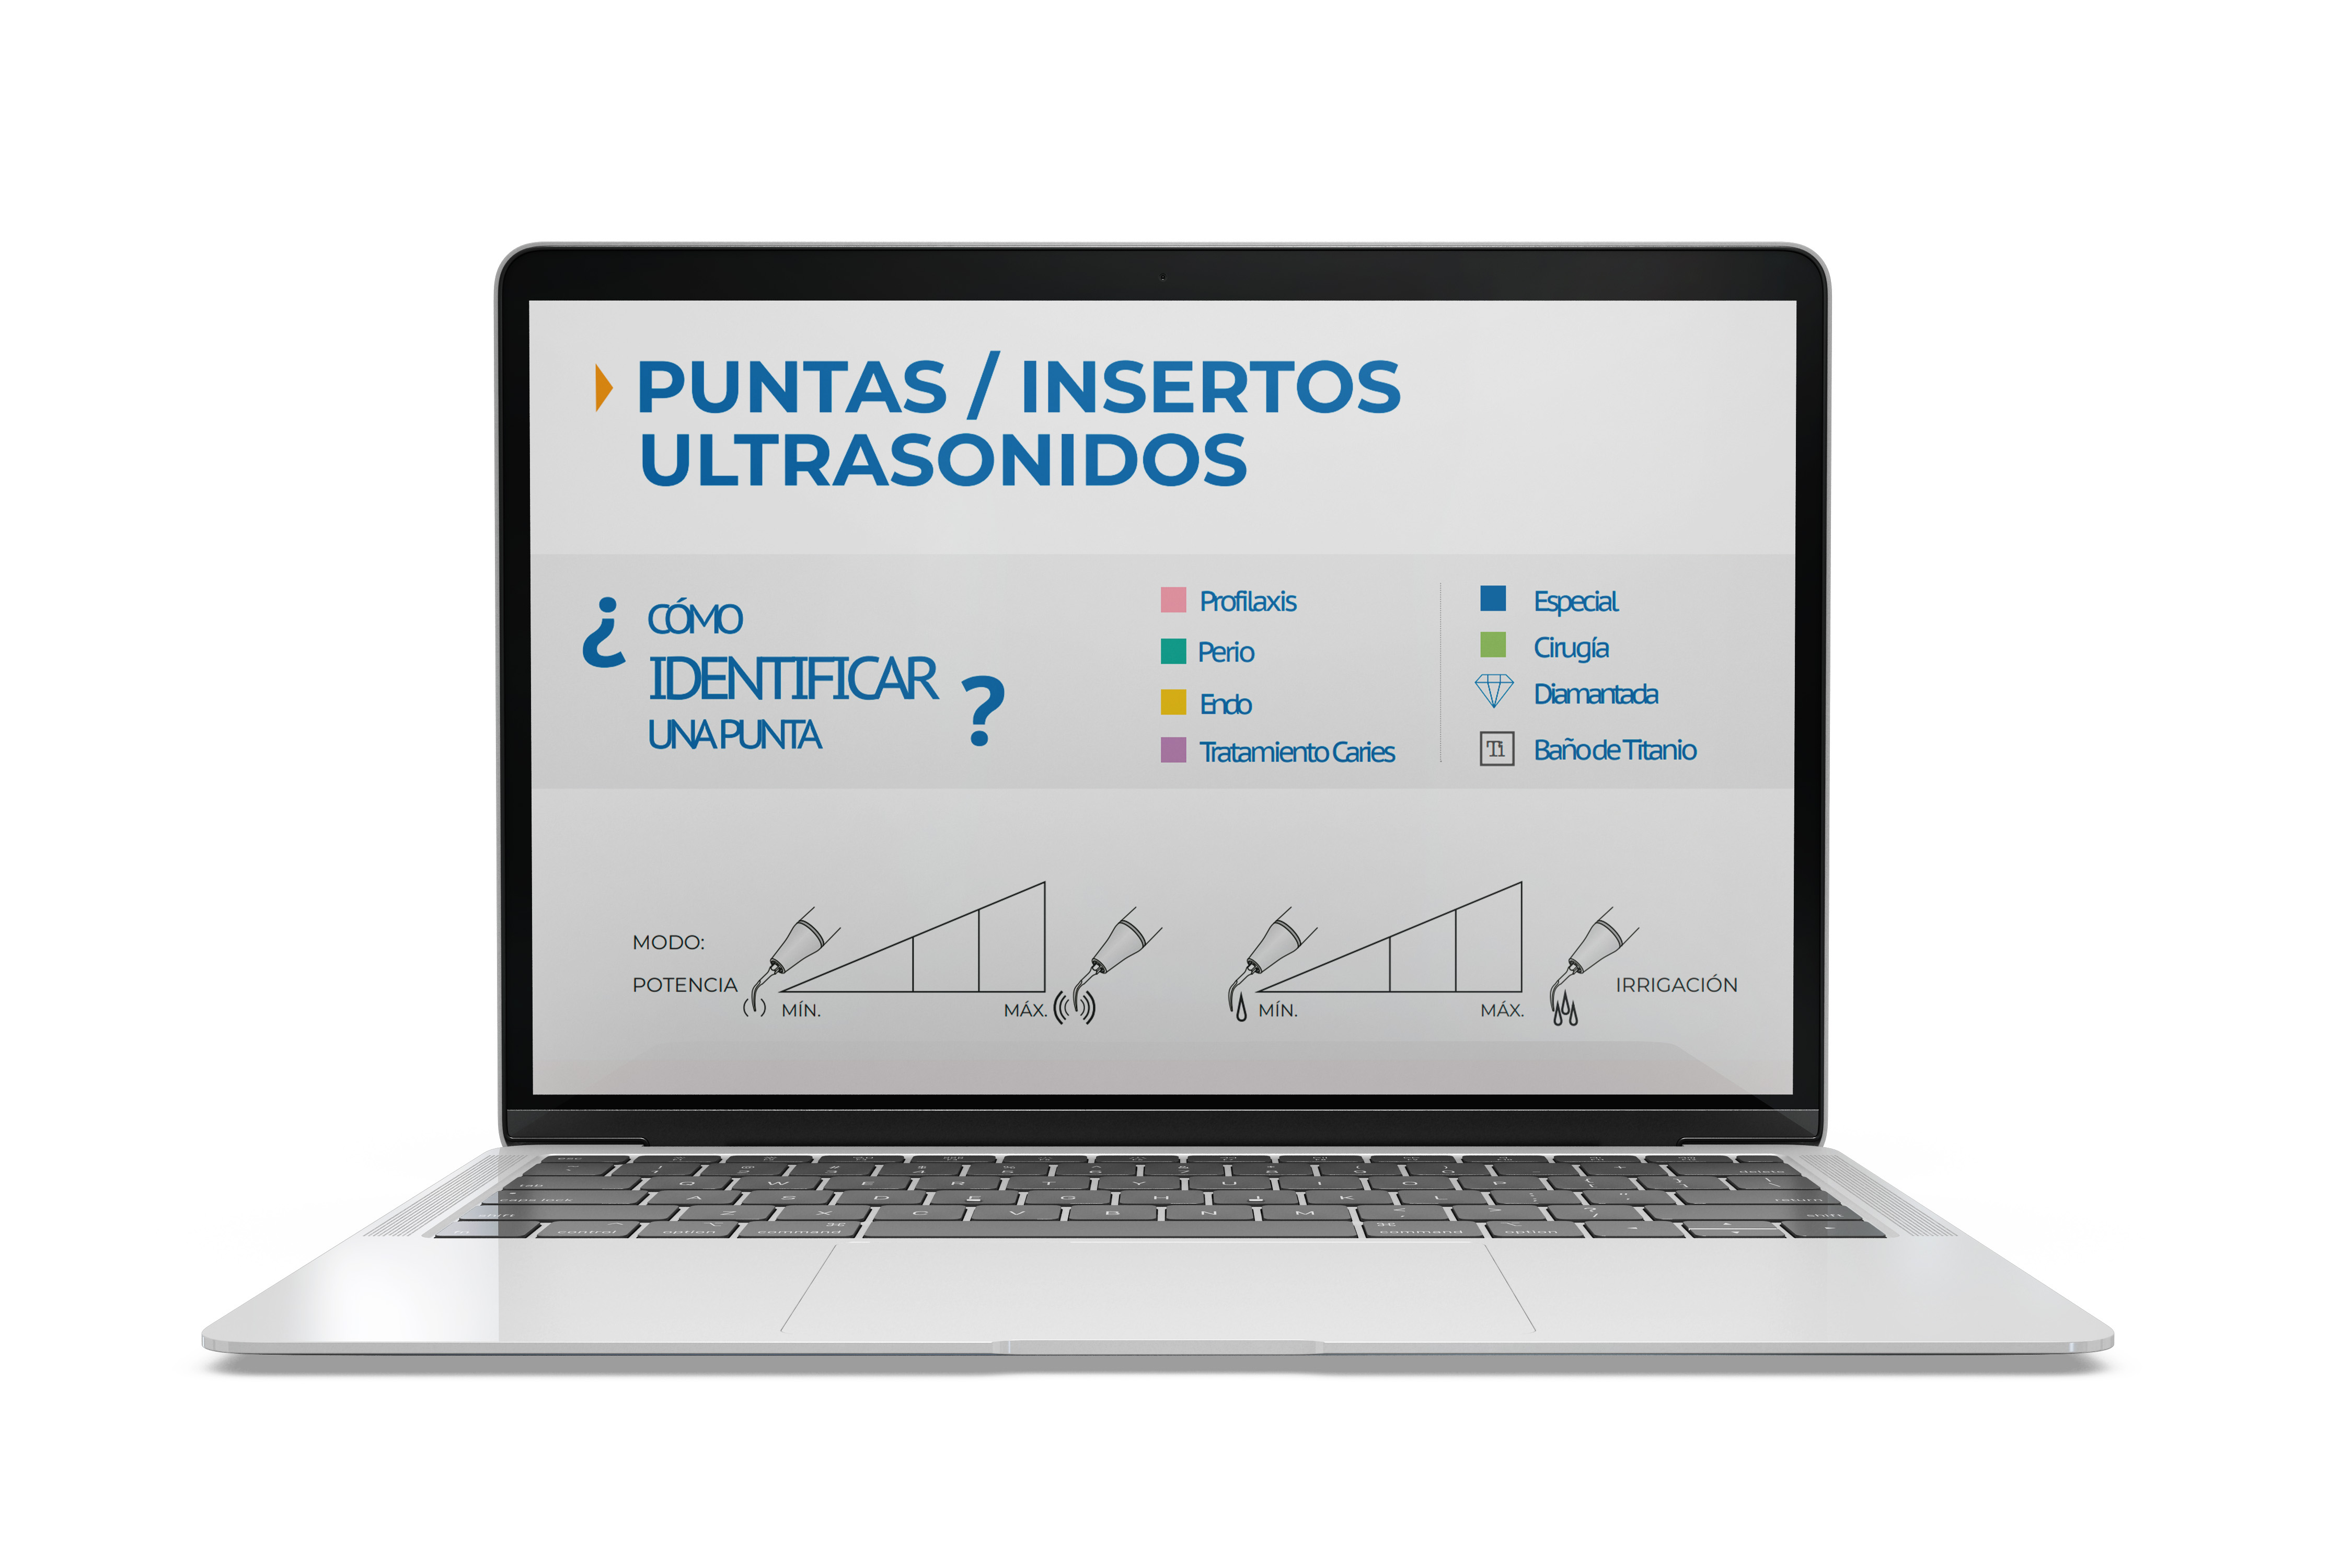 Catálogo Puntas / Insertos Ultrasonidos